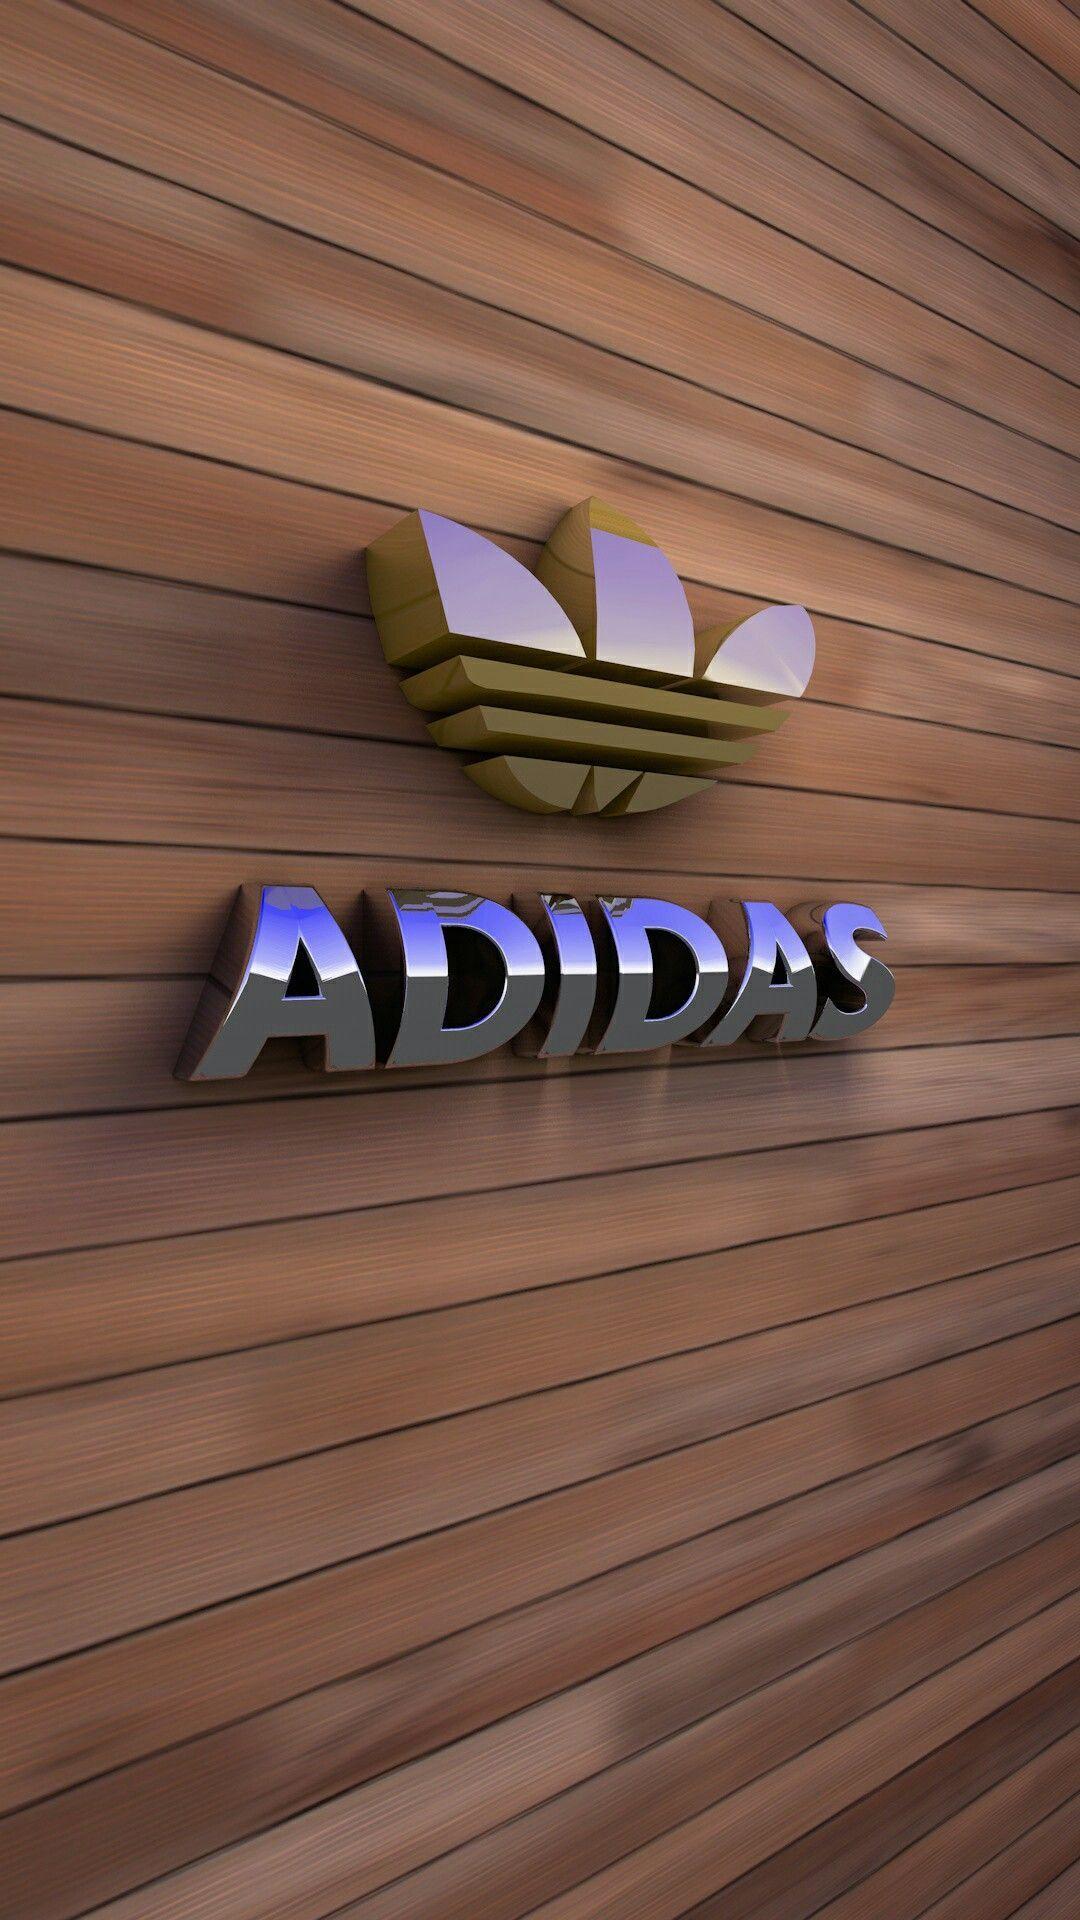 best image about adidas image Jesse owens. Logos